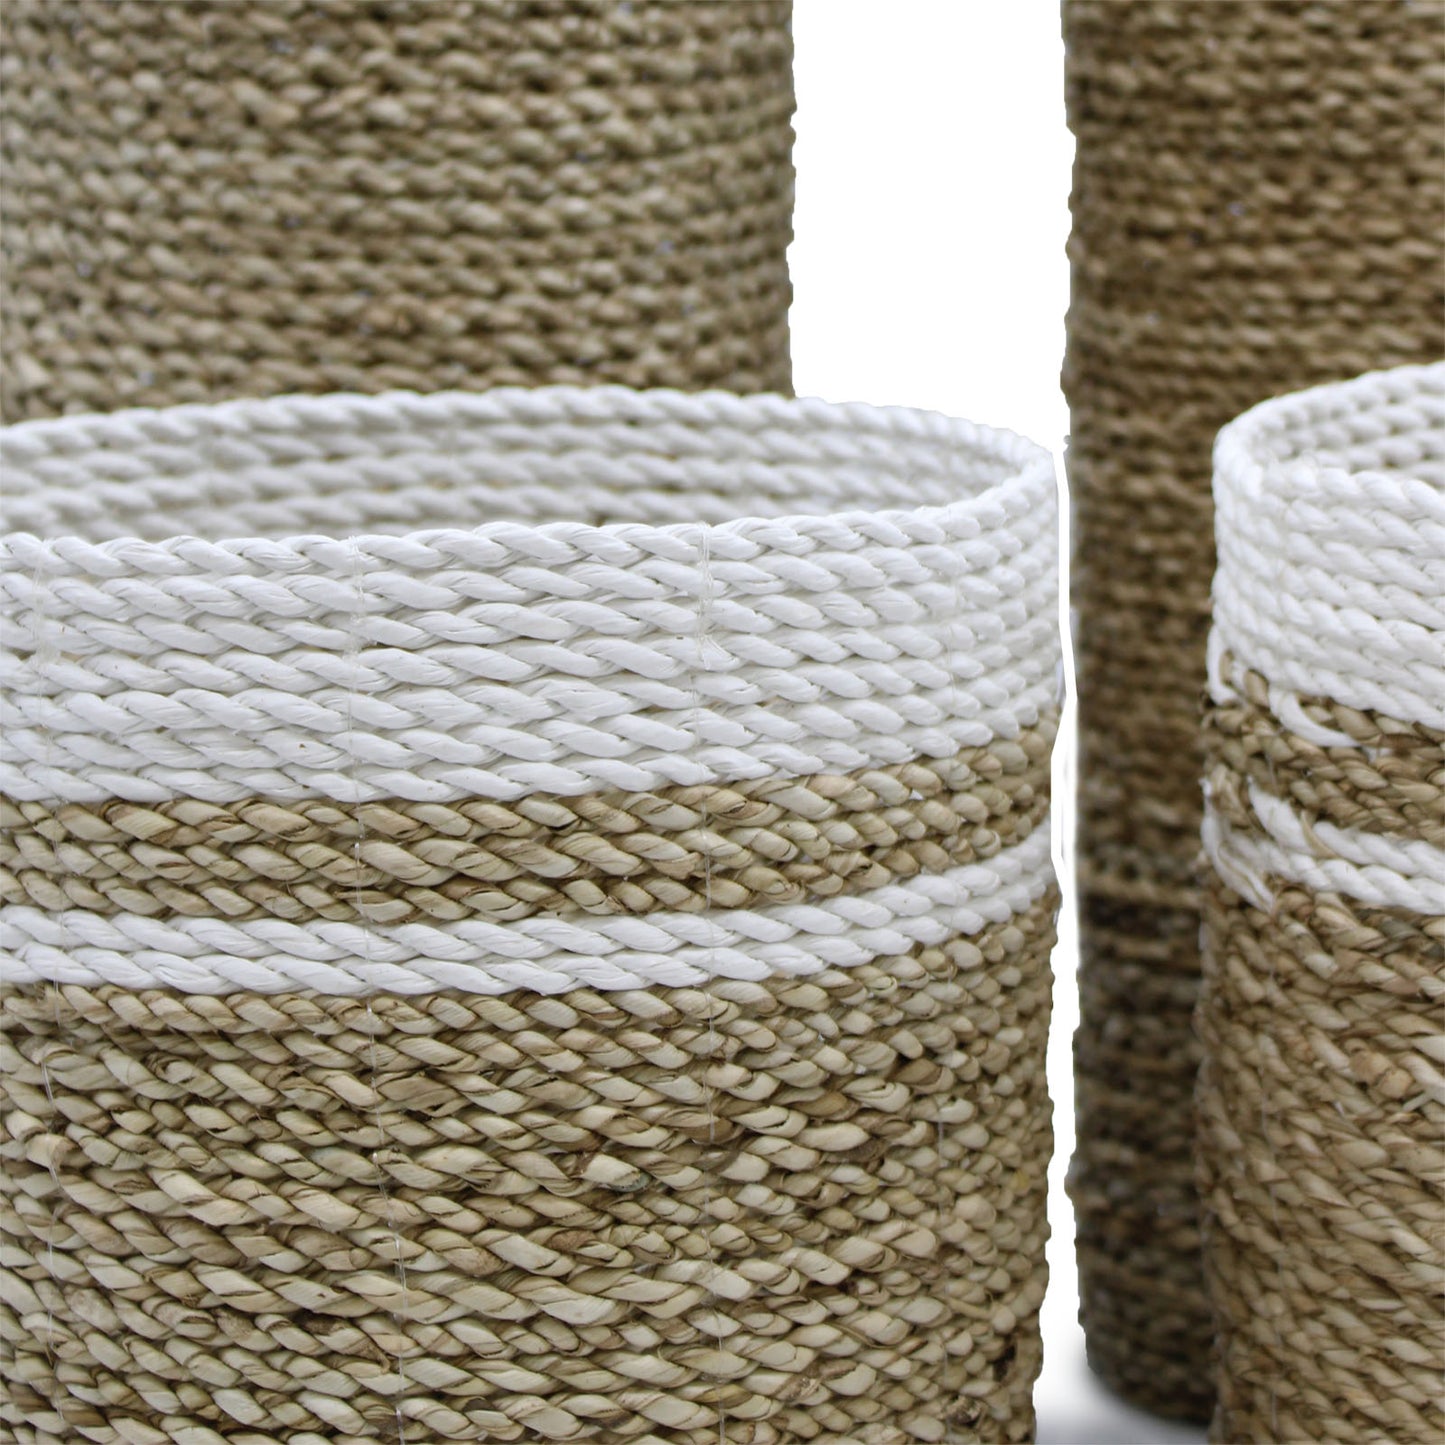 Seagrass Vase & Bins Sets